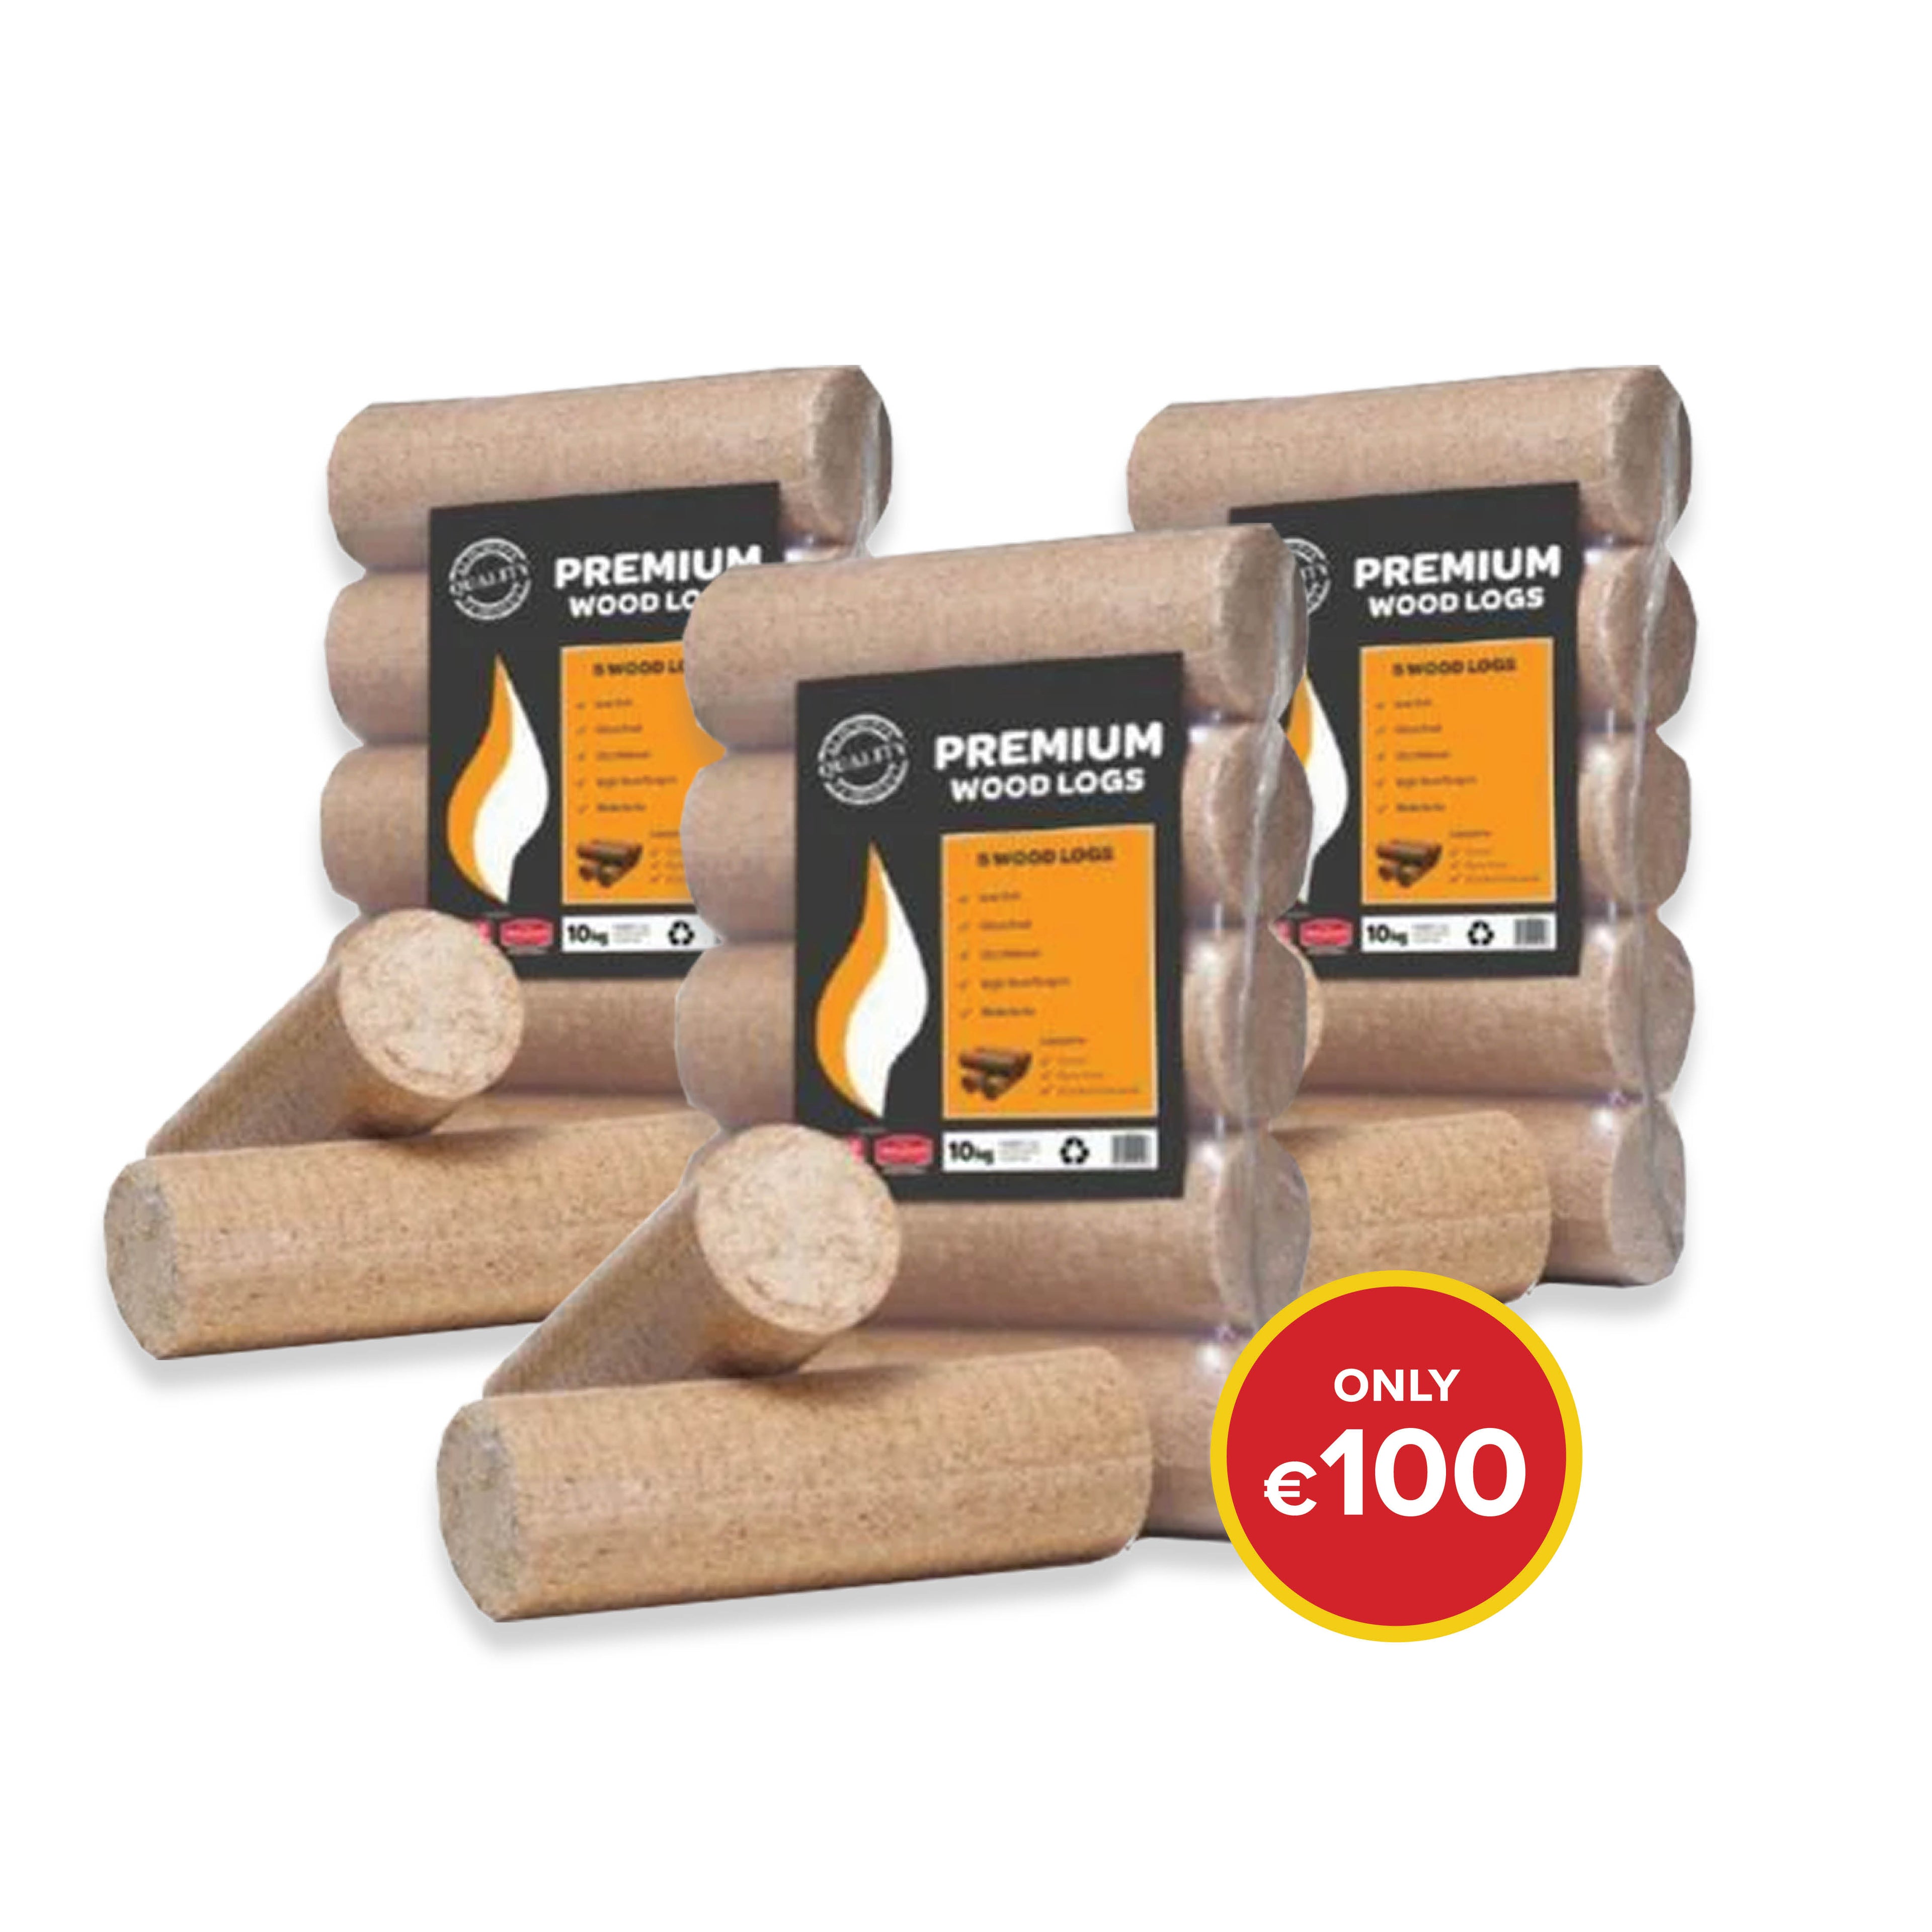 Buy 25 bales of 10kg Premium Hardwood logs for €100